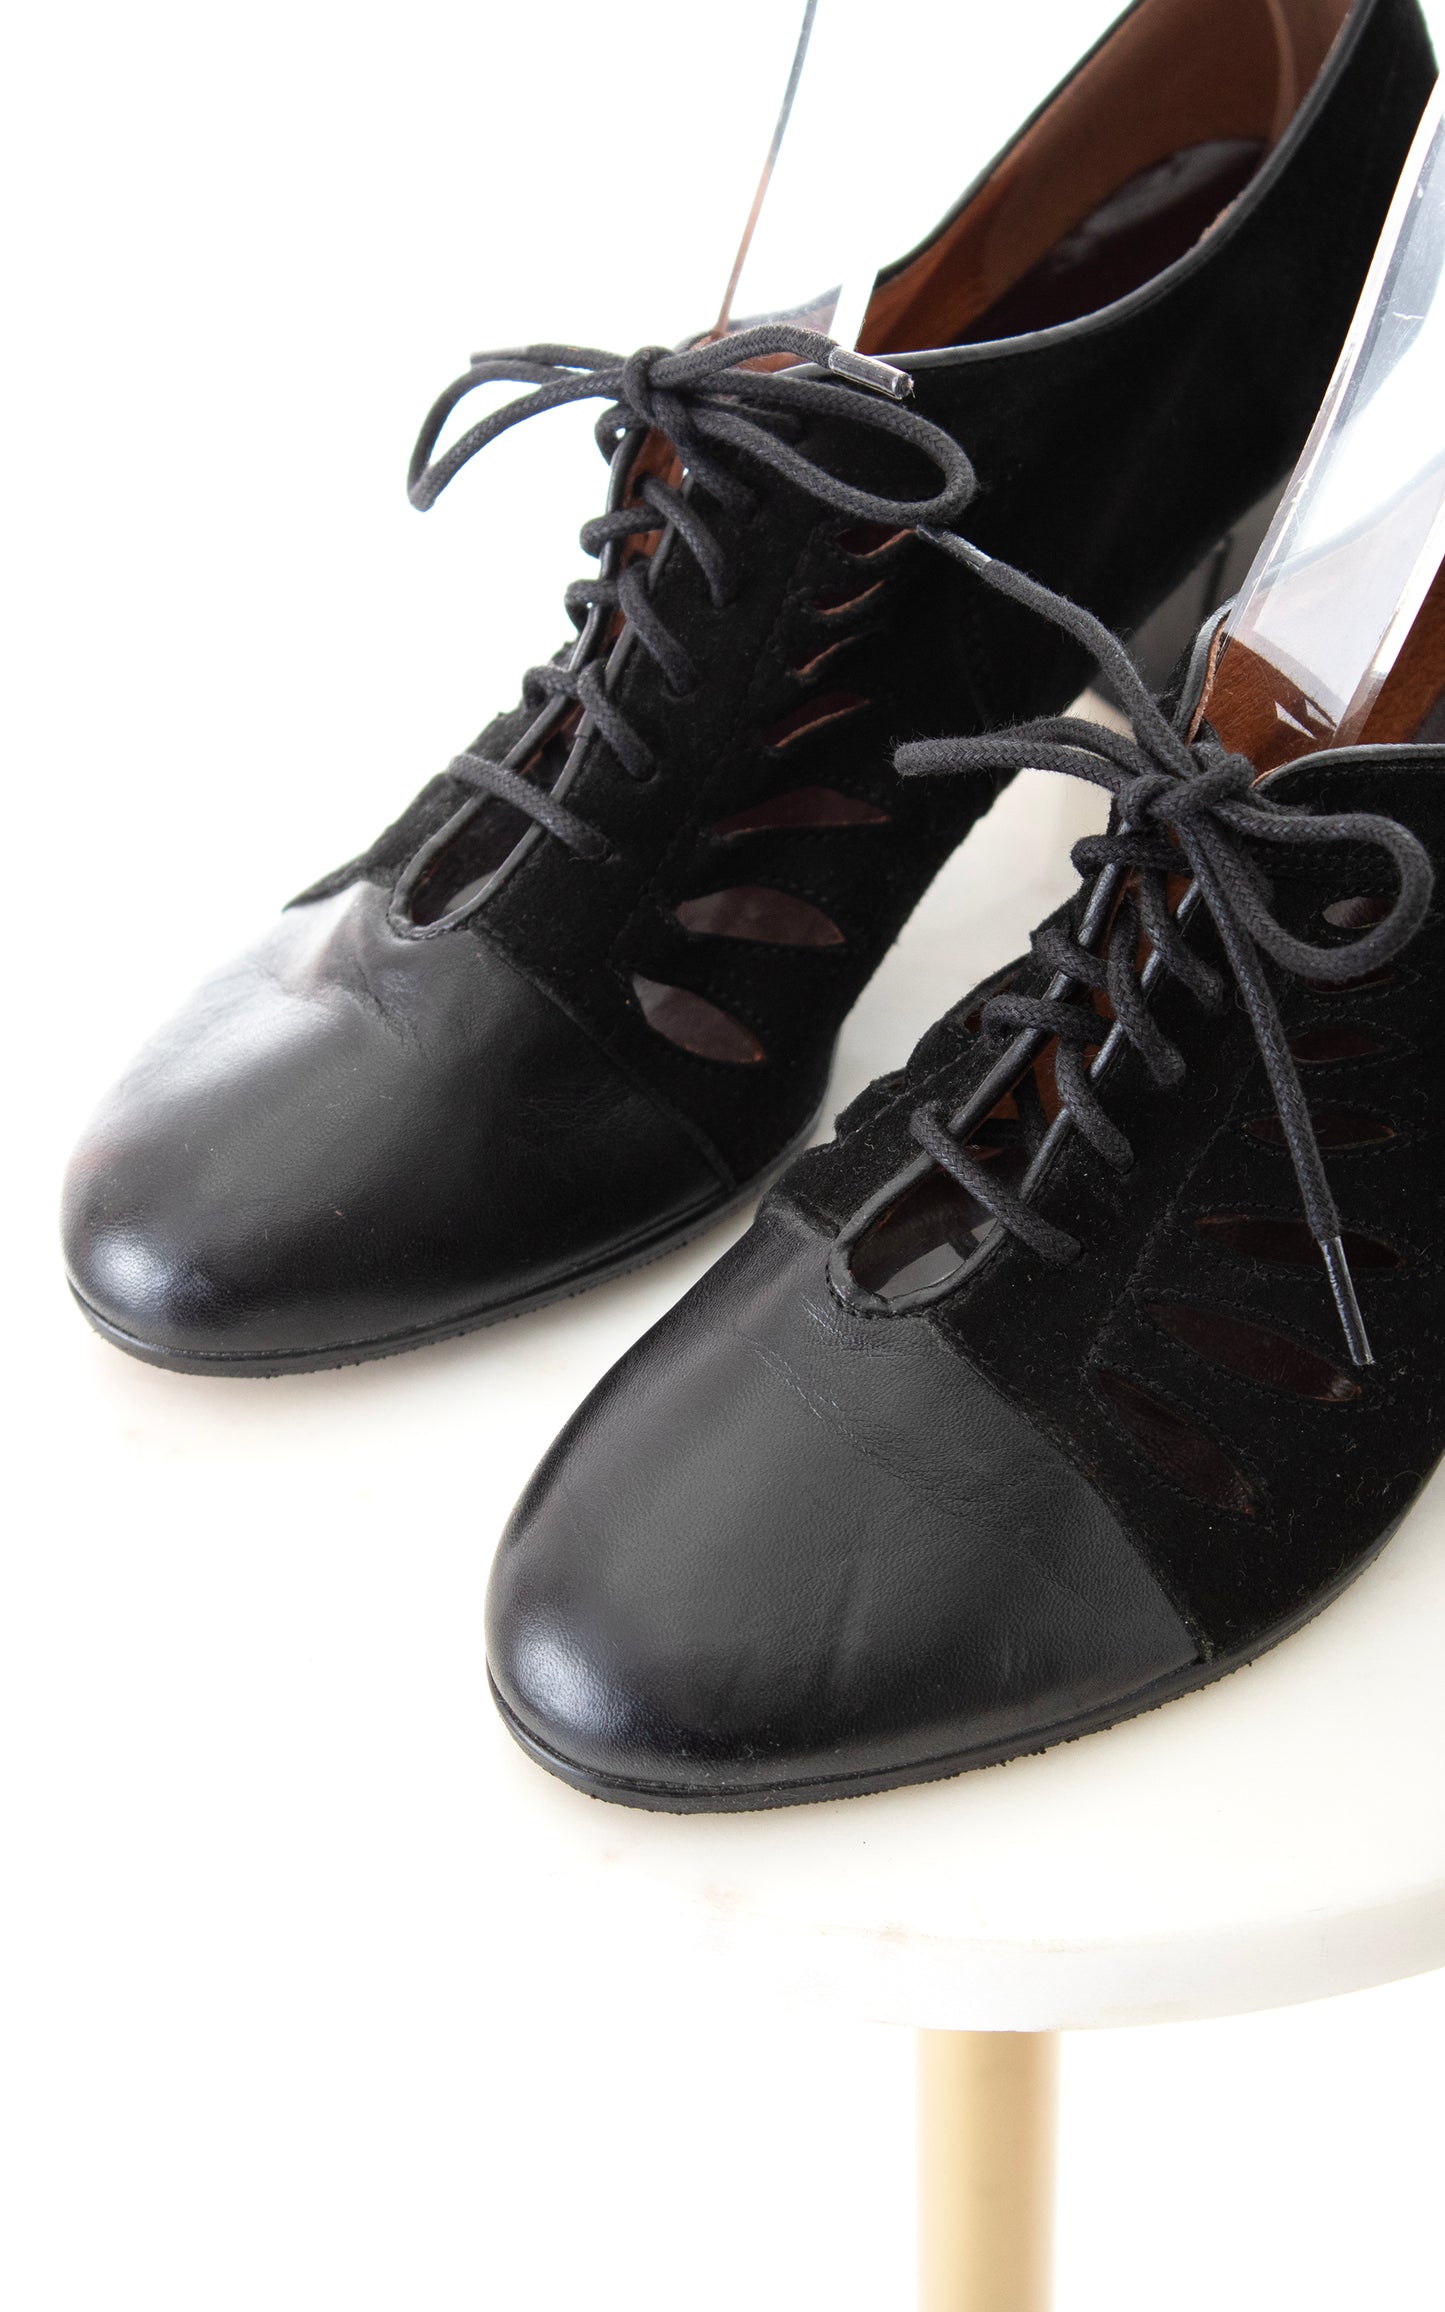 Modern REMIX 1930s Style "Uptown" Heels | size US 7.5